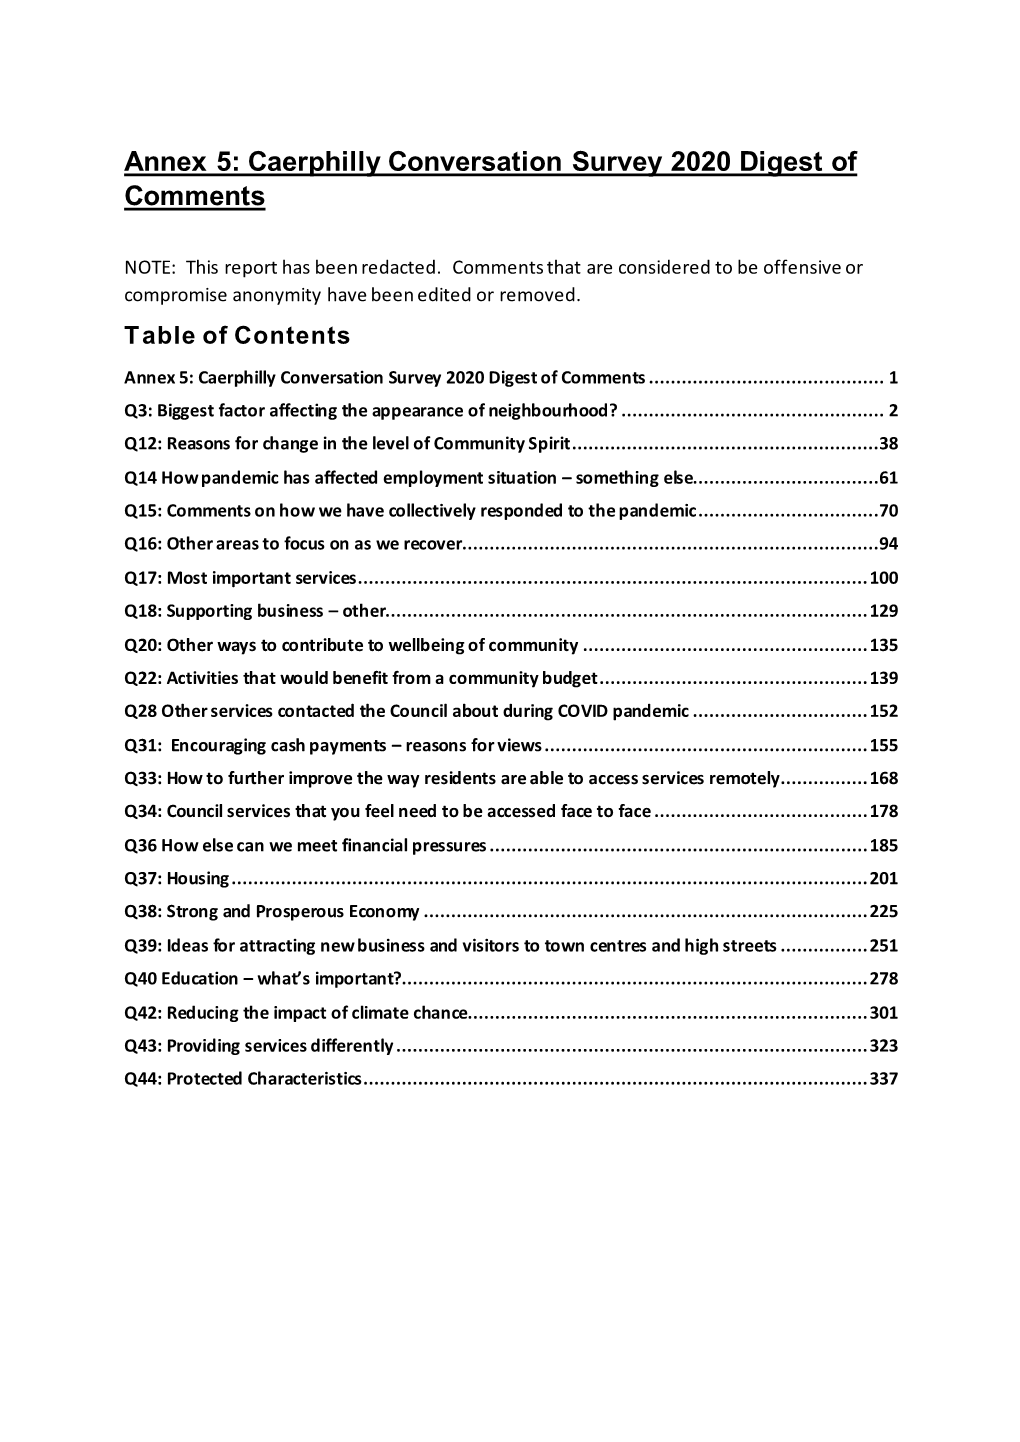 Annex 5: Caerphilly Conversation Survey 2020 Digest of Comments